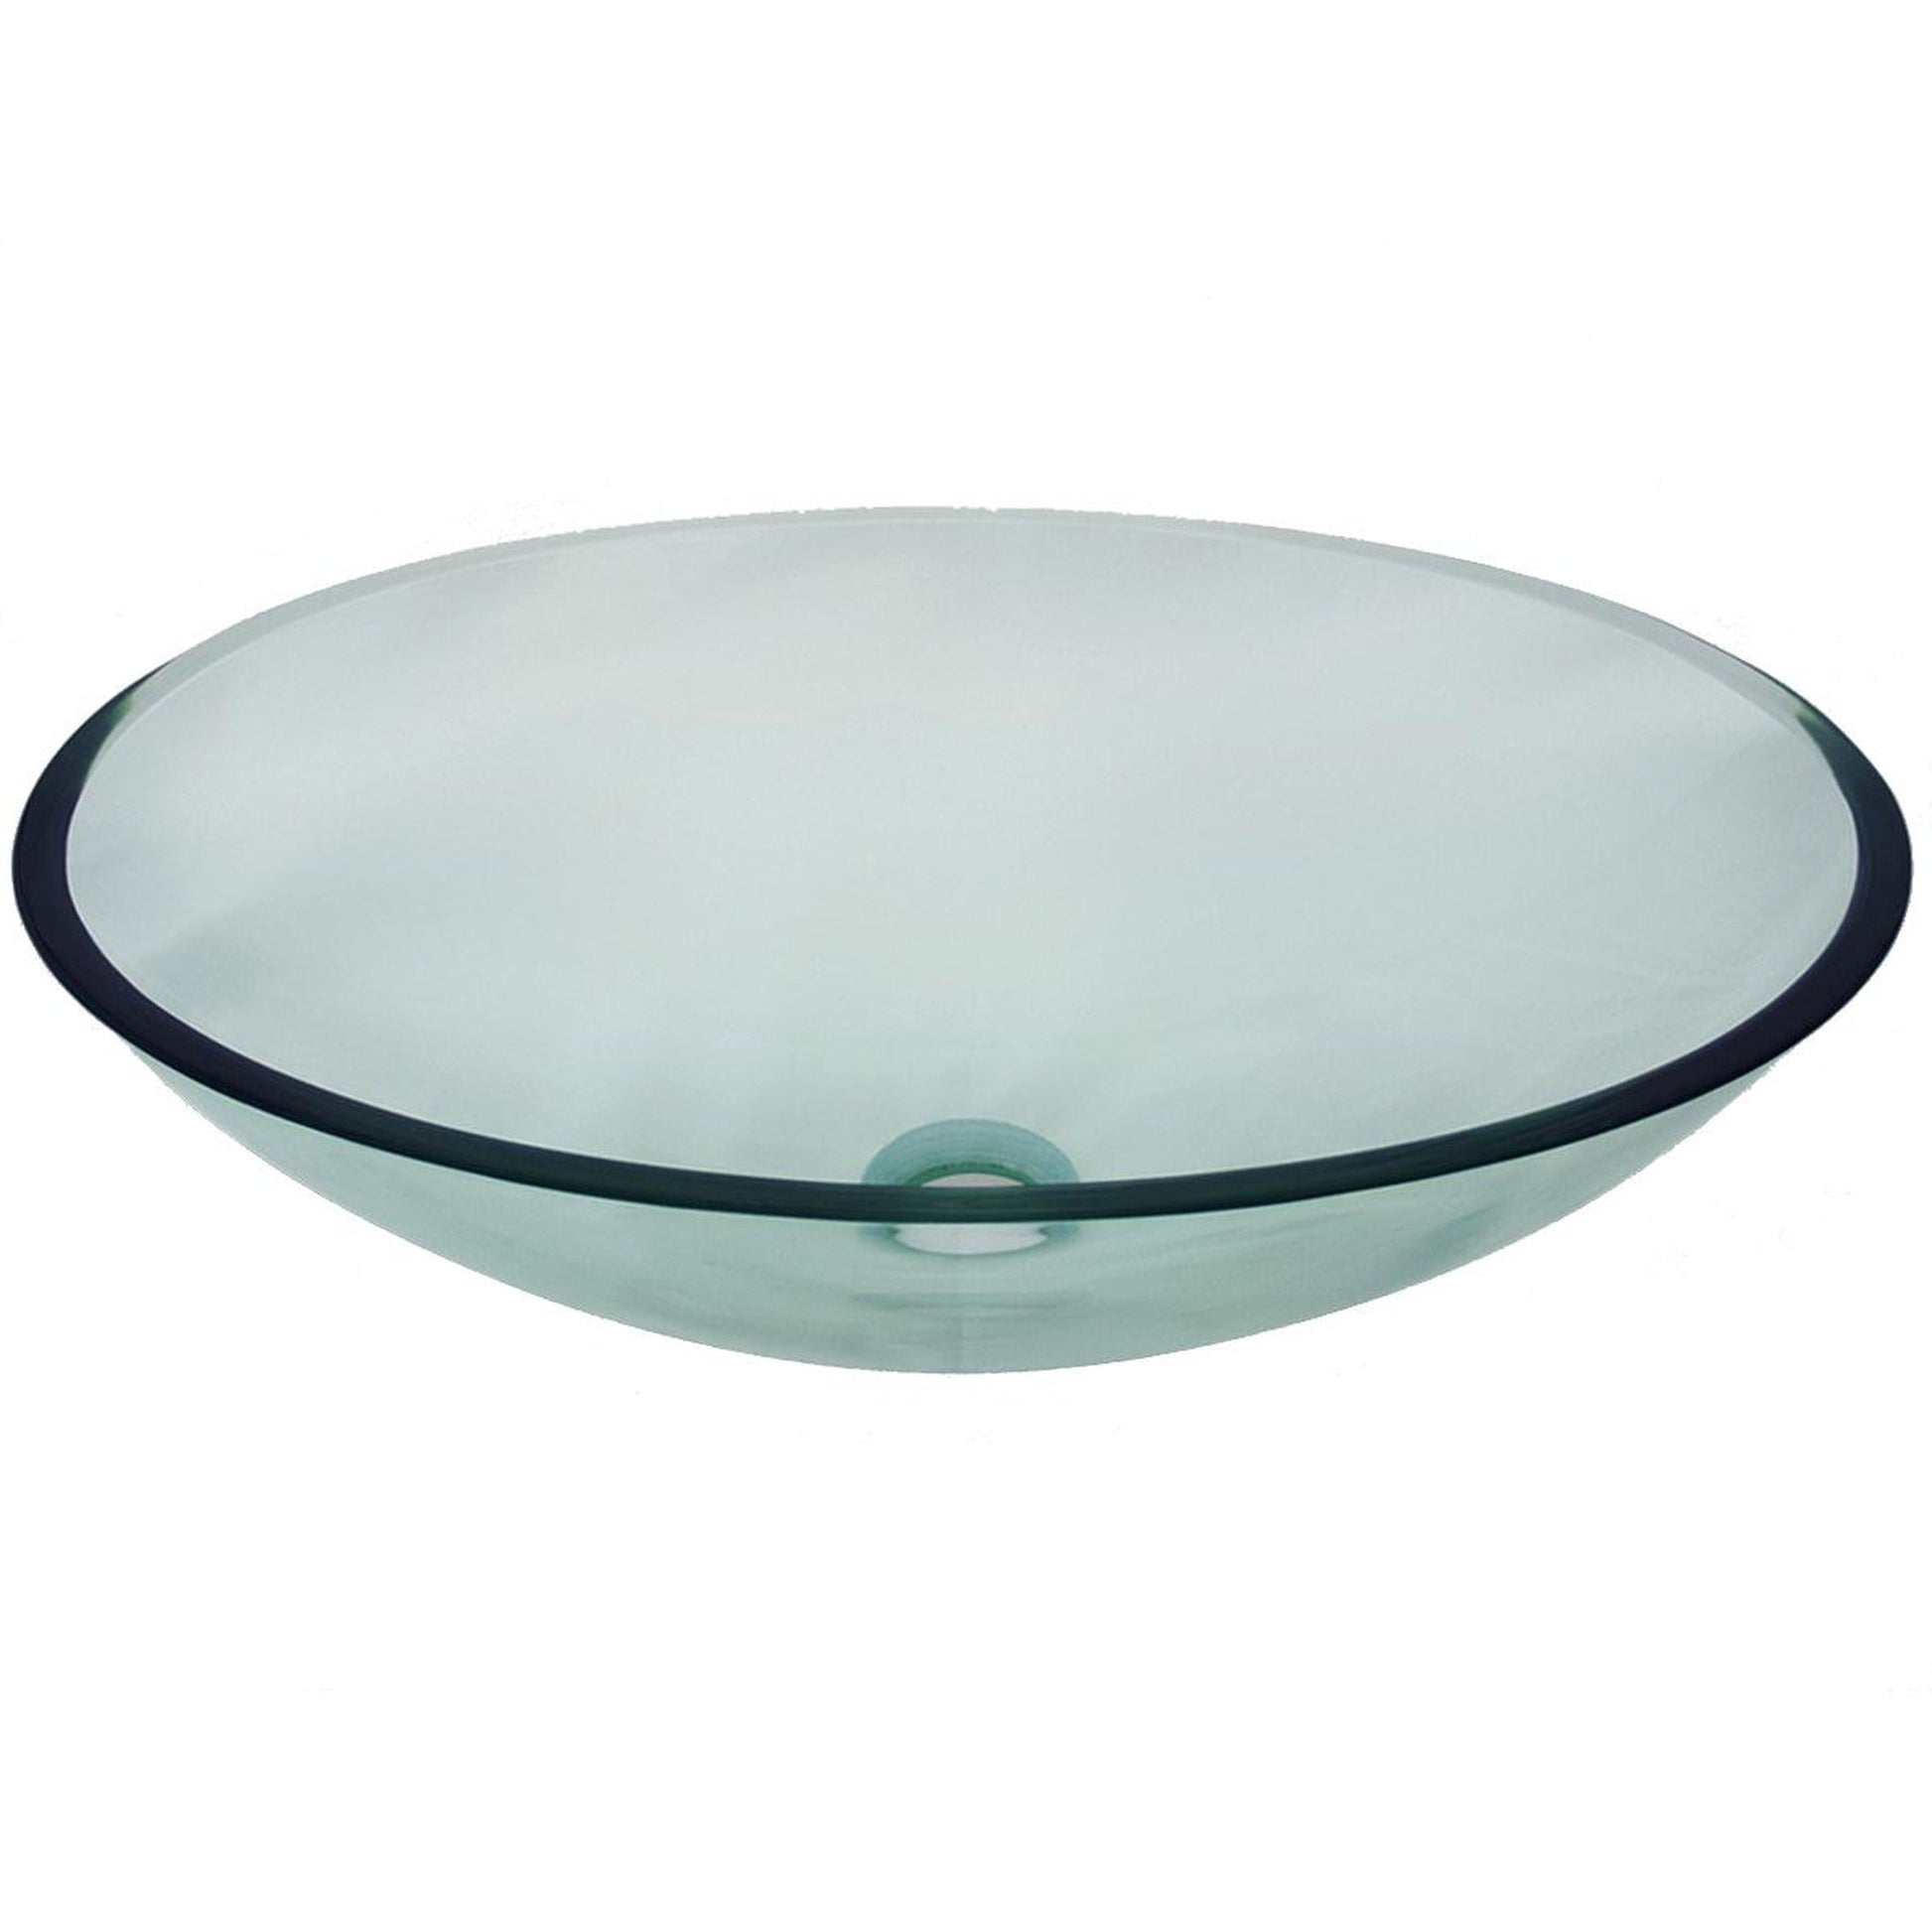 Pelican Int'l Vaso Series PL-661 Clear Glass Oval Vessel Bathroom Sink 20" x 15"